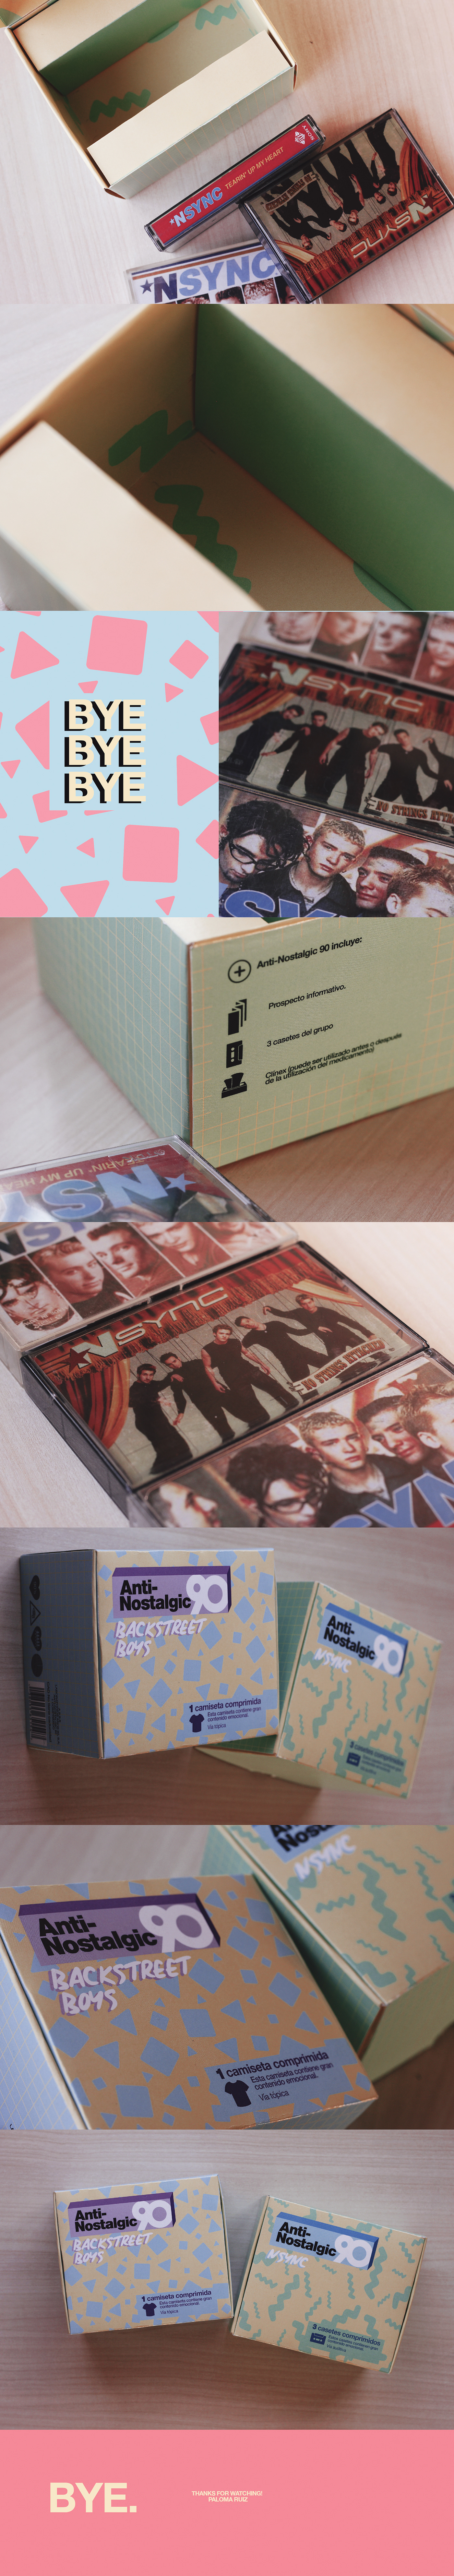 boy band 90's group music Backstreet Boys NSYNC design Packaging graphic back